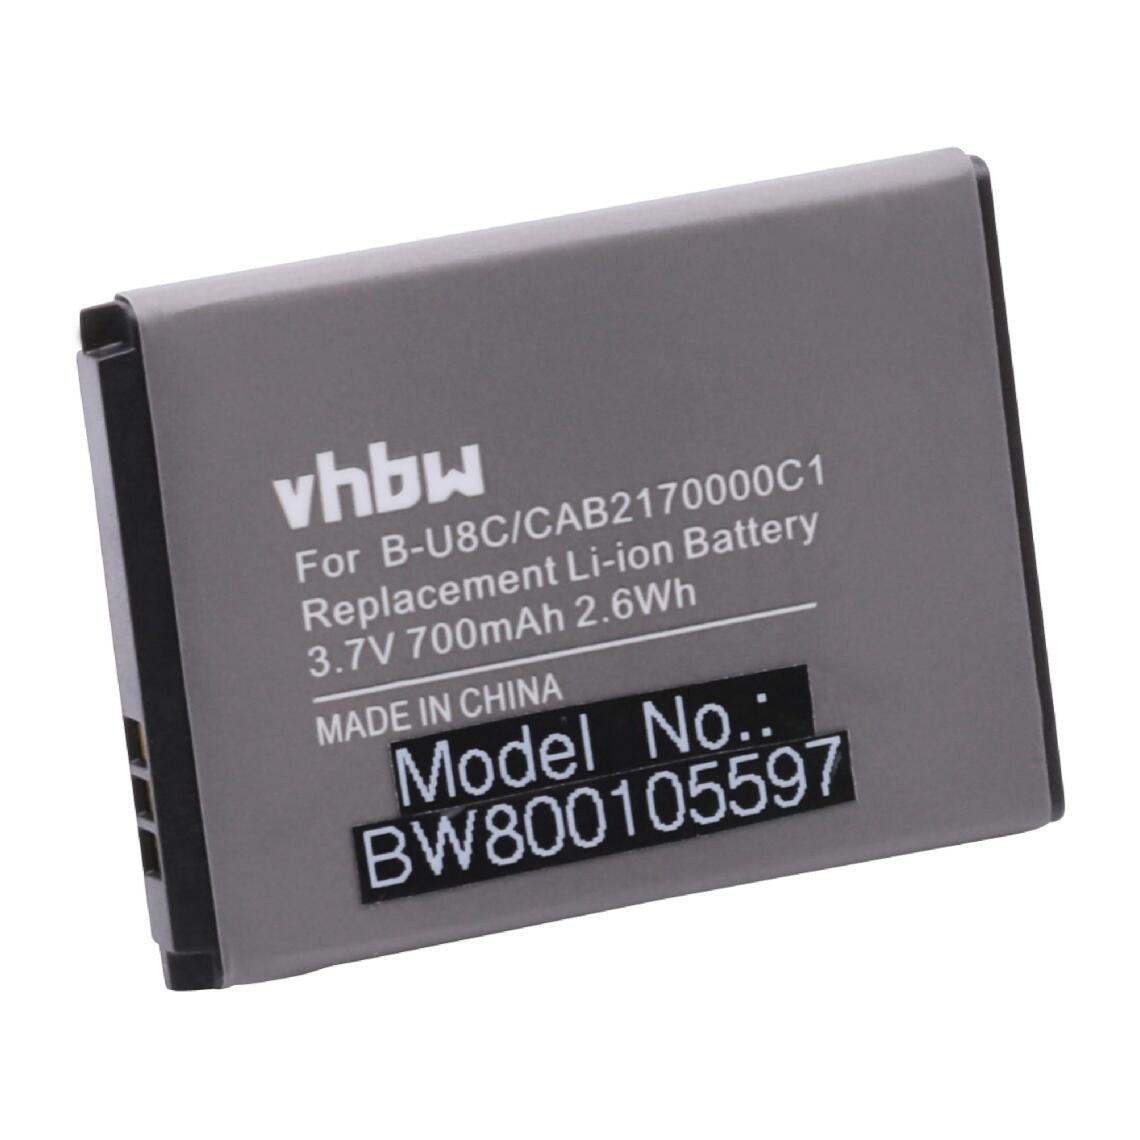 Vhbw - vhbw batterie compatible avec Alcatel One Touch OT-508A, OT-565, OT-600, OT-S320, OT-S521A smartphone (700mAh, 3,7V, Li-Ion) - Batterie téléphone